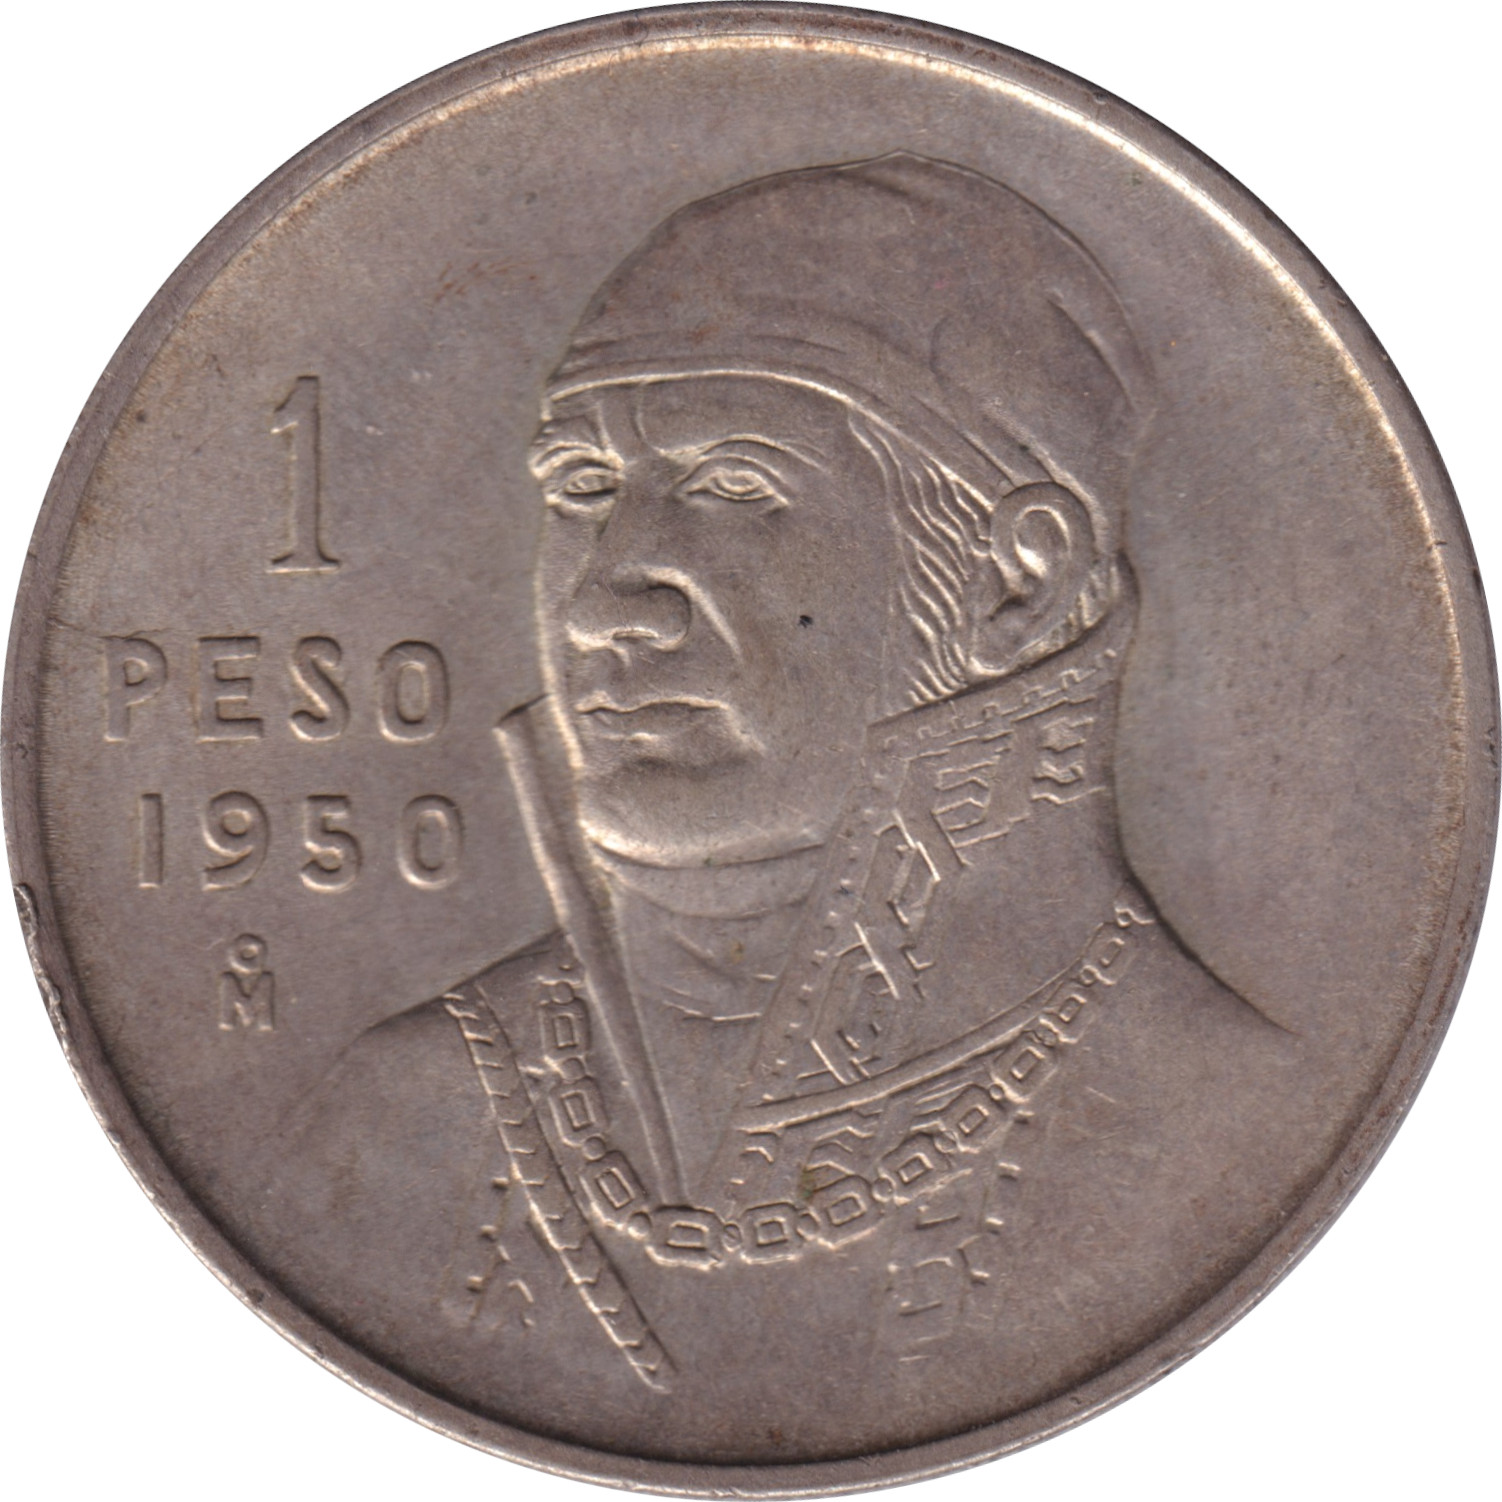 1 peso - Hidalgo - Buste de trois quart